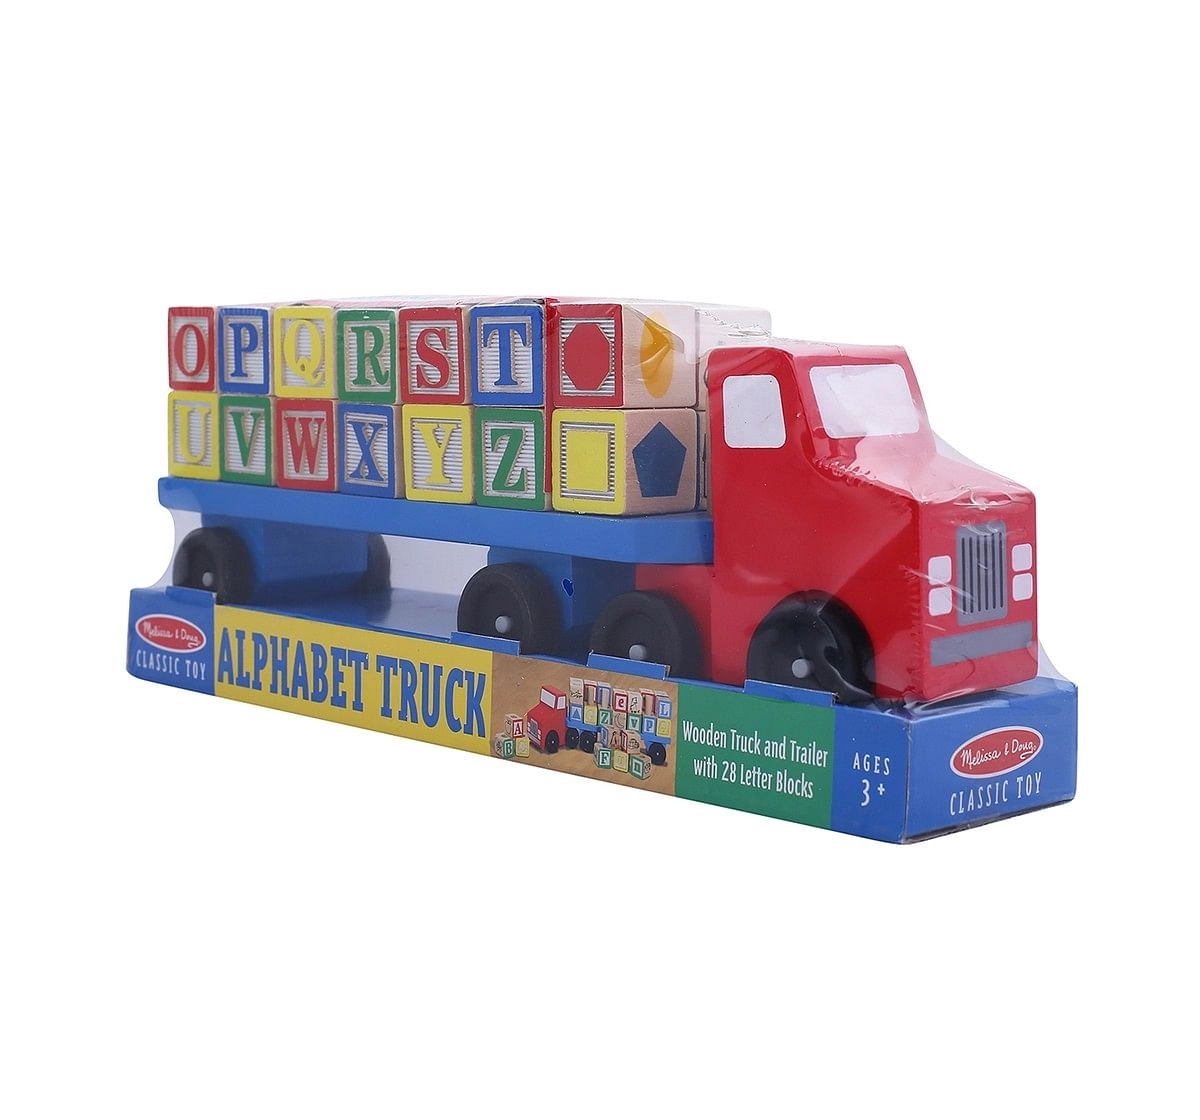  Melissa & Doug Alphabet Truck Wooden Toys for Kids age 3Y+ 